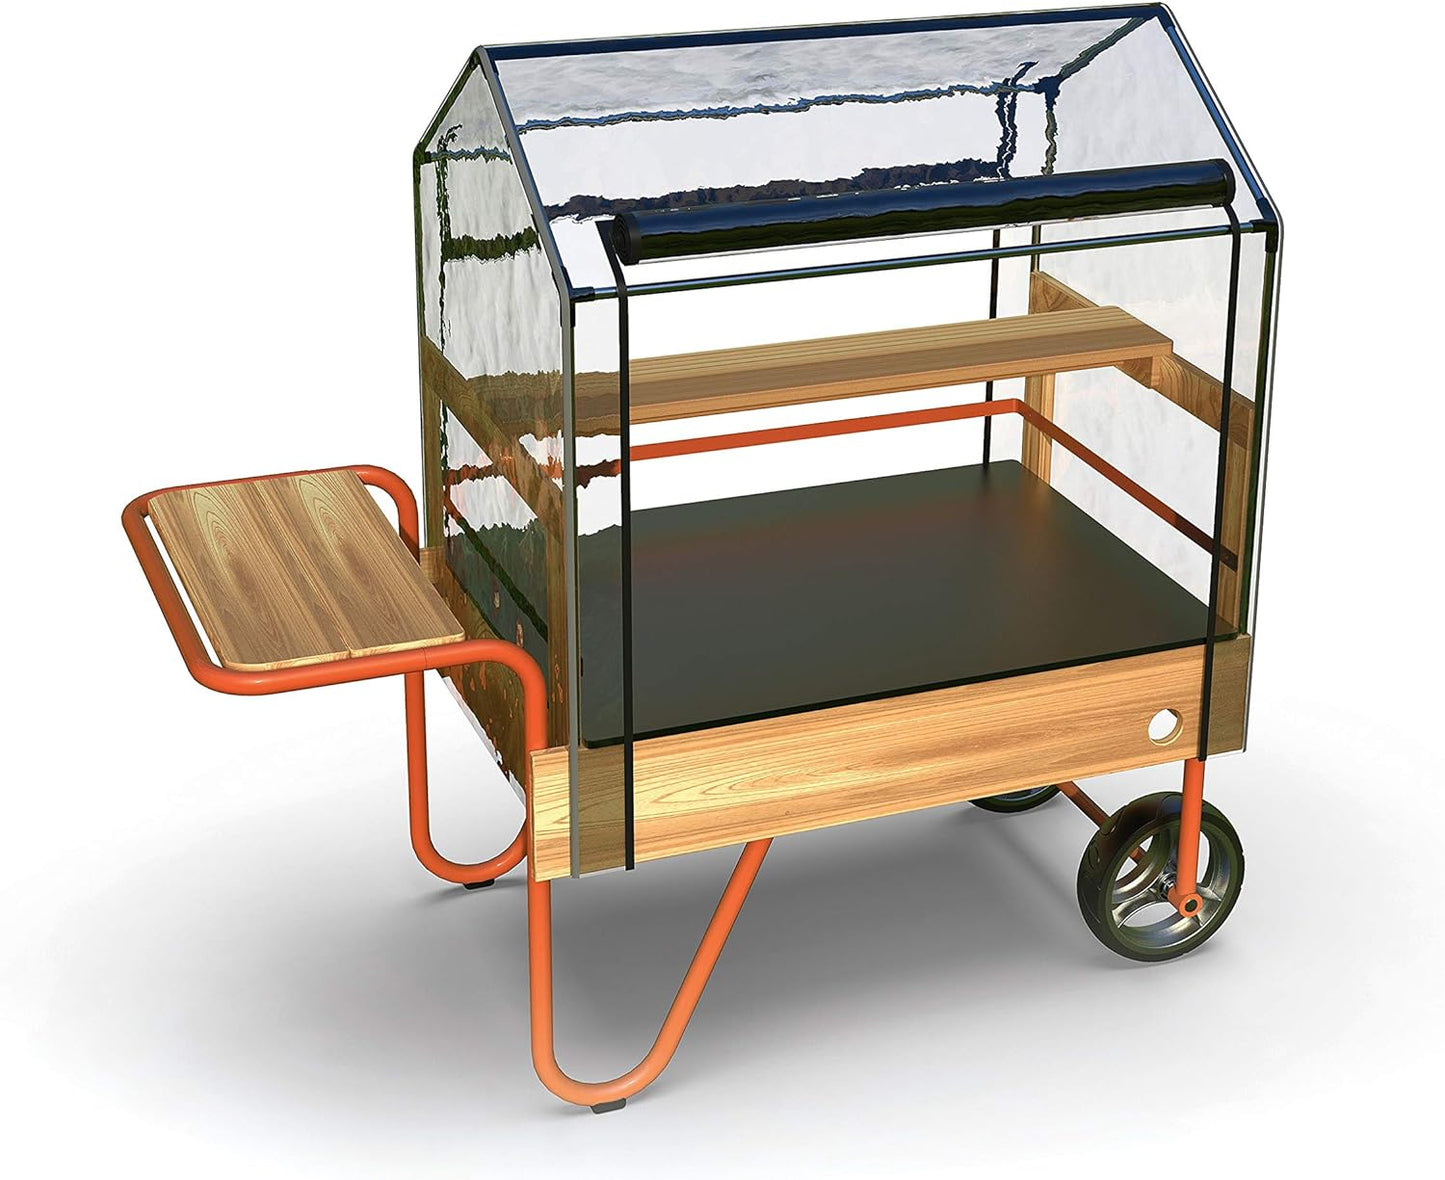 Beleduc Mobile Greenhouse Little Gardener 可移動陽光花車